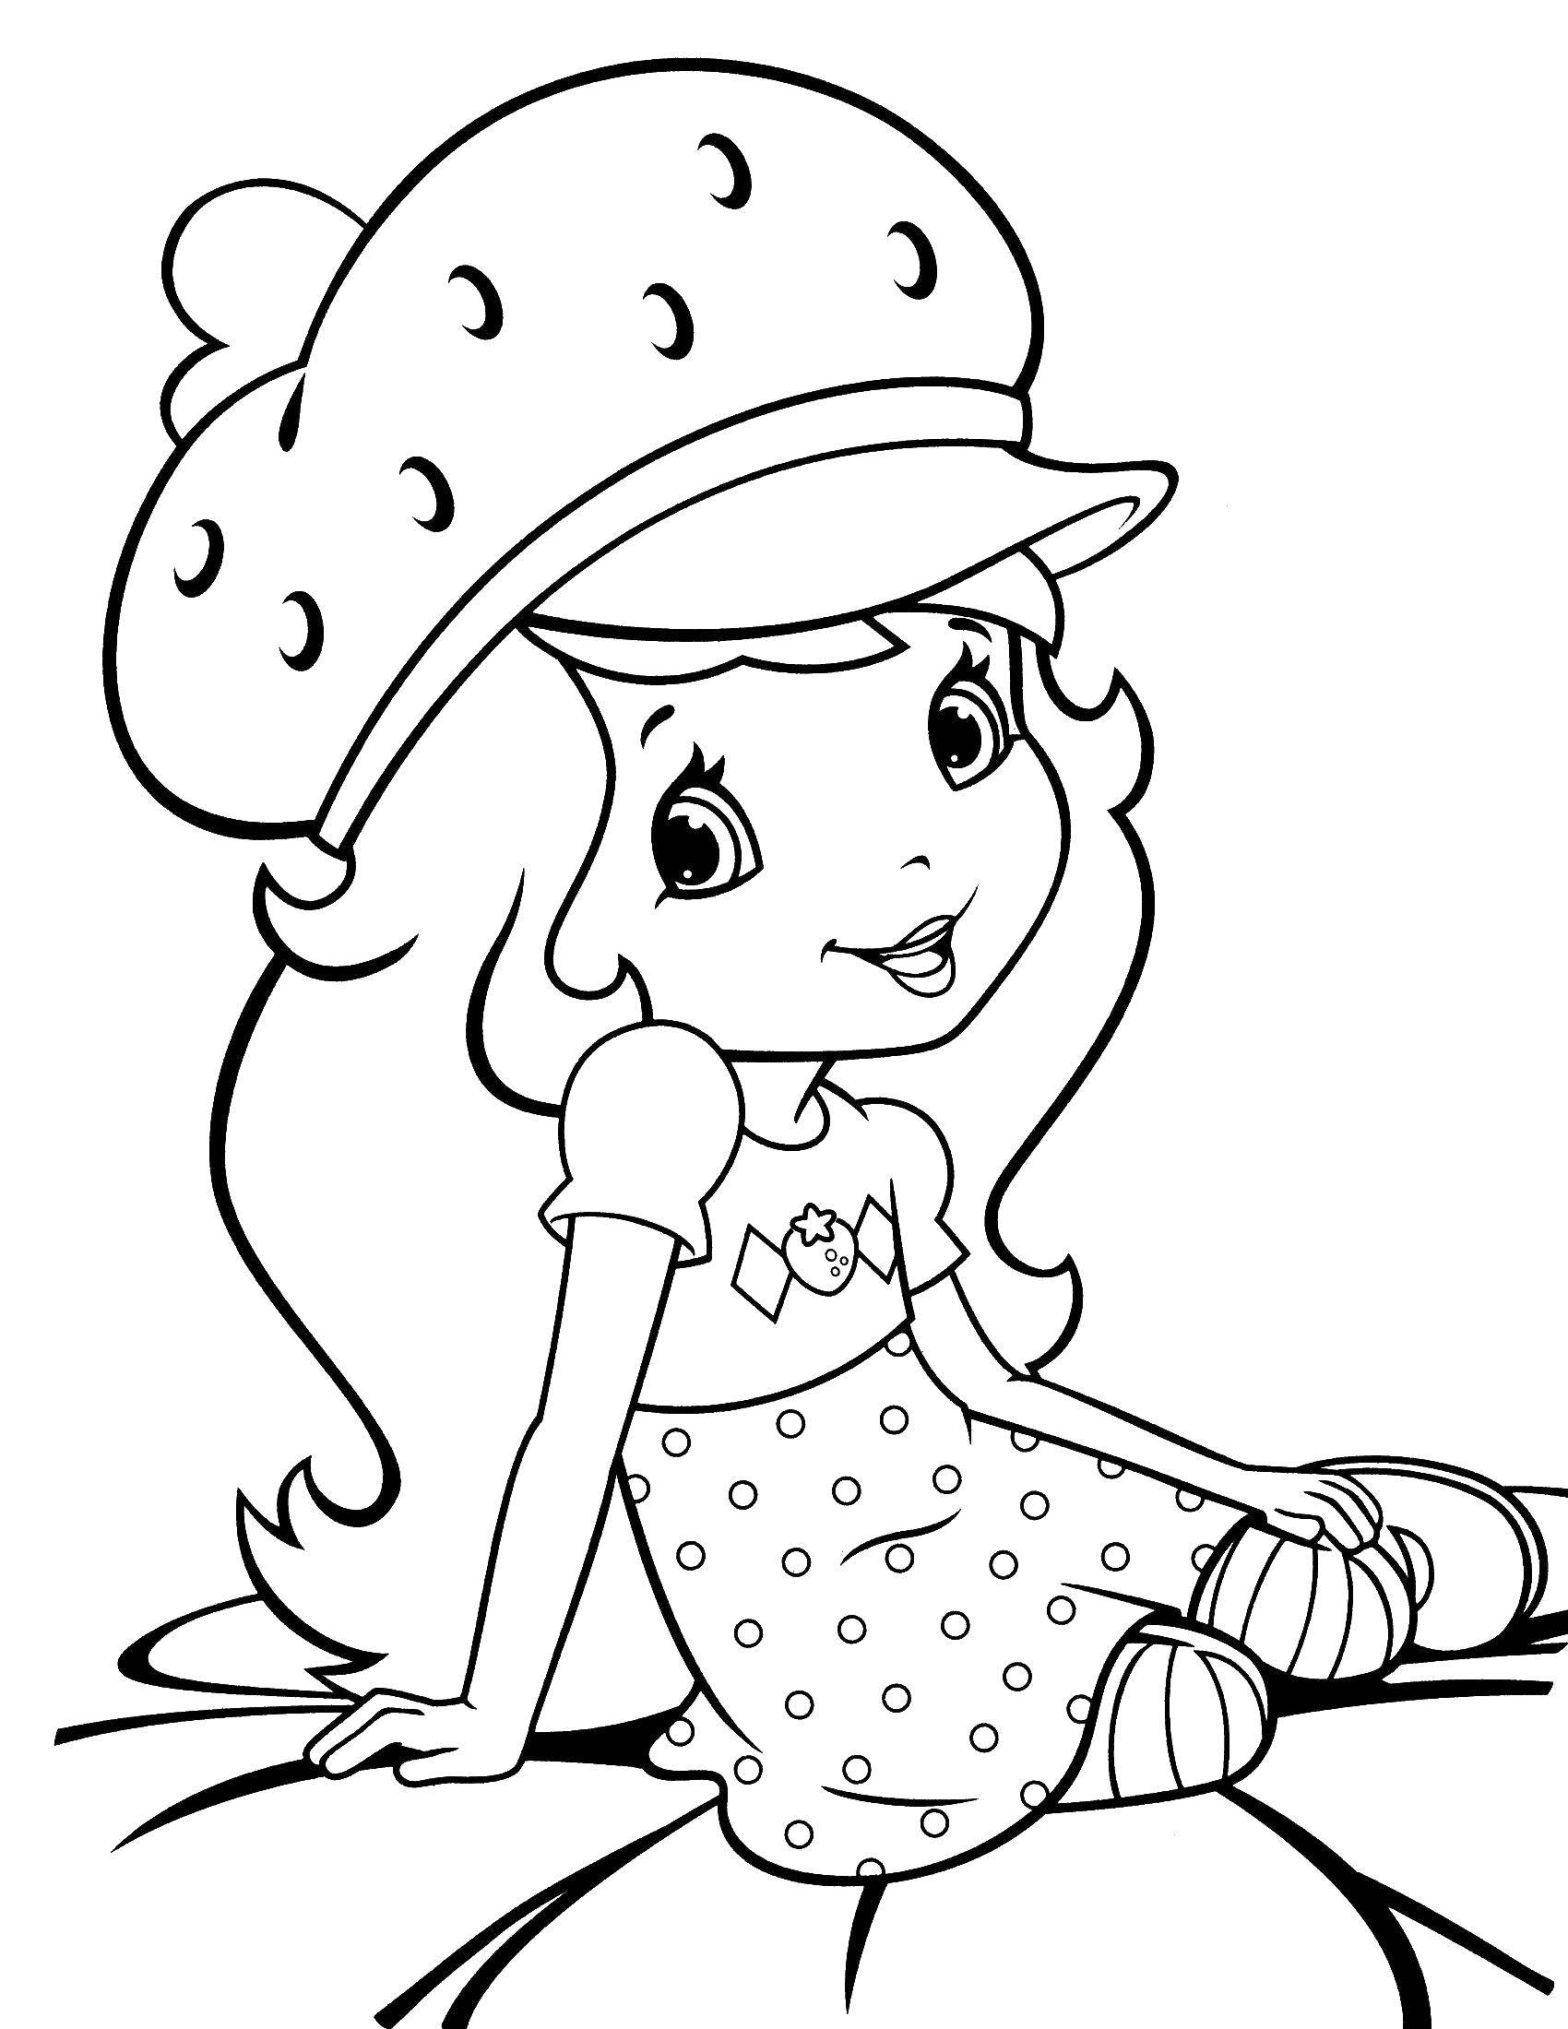 Раскраска Шарлотта Земляничка - девочка с земляничкой в руках (Шарлотта, Земляничка)